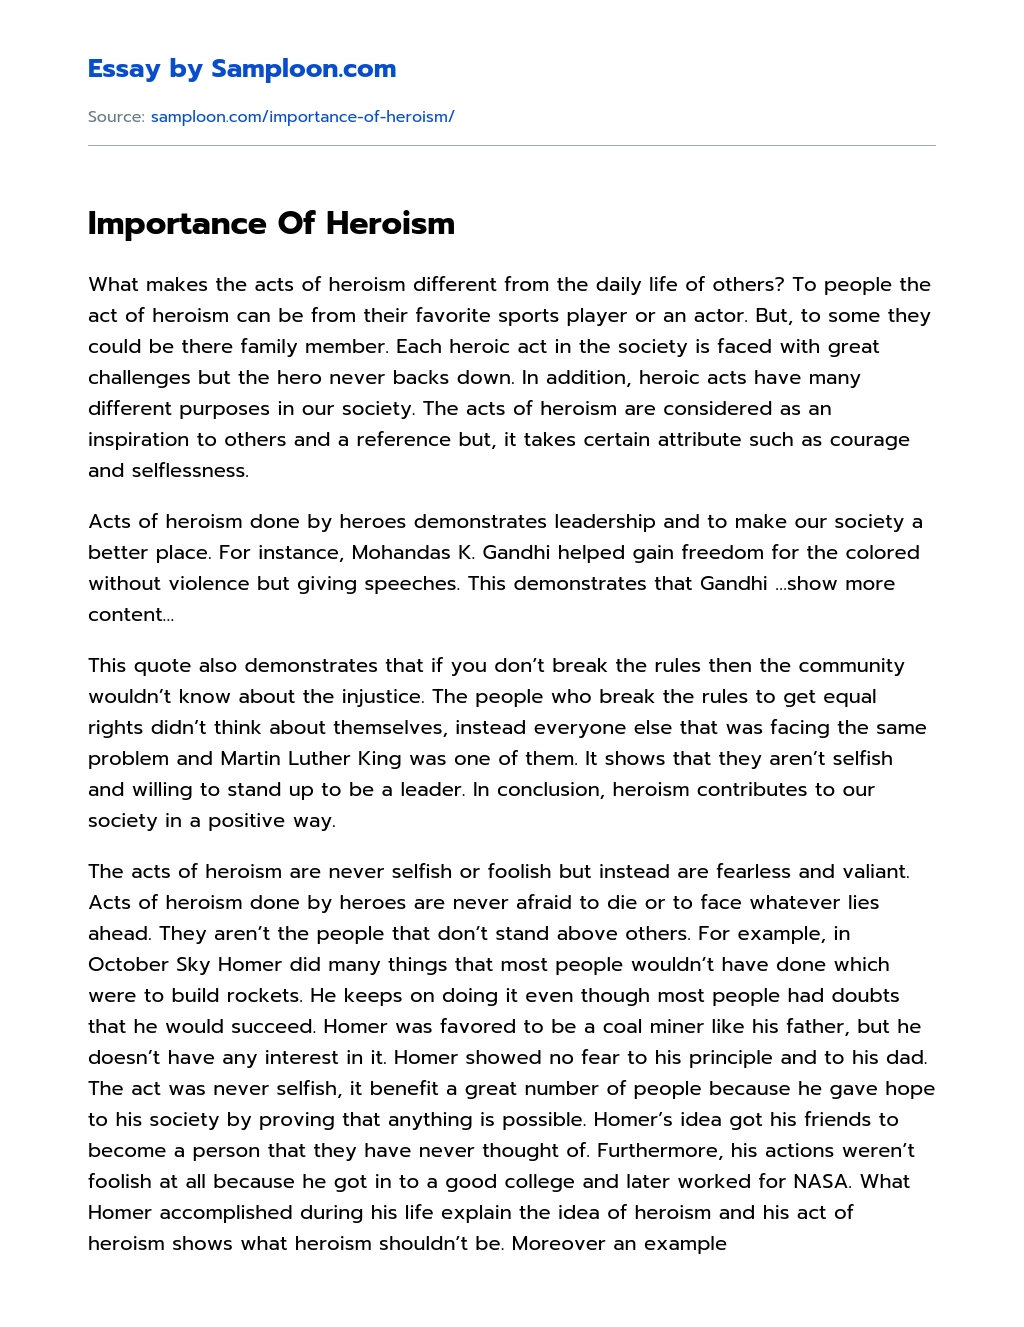 Importance Of Heroism essay